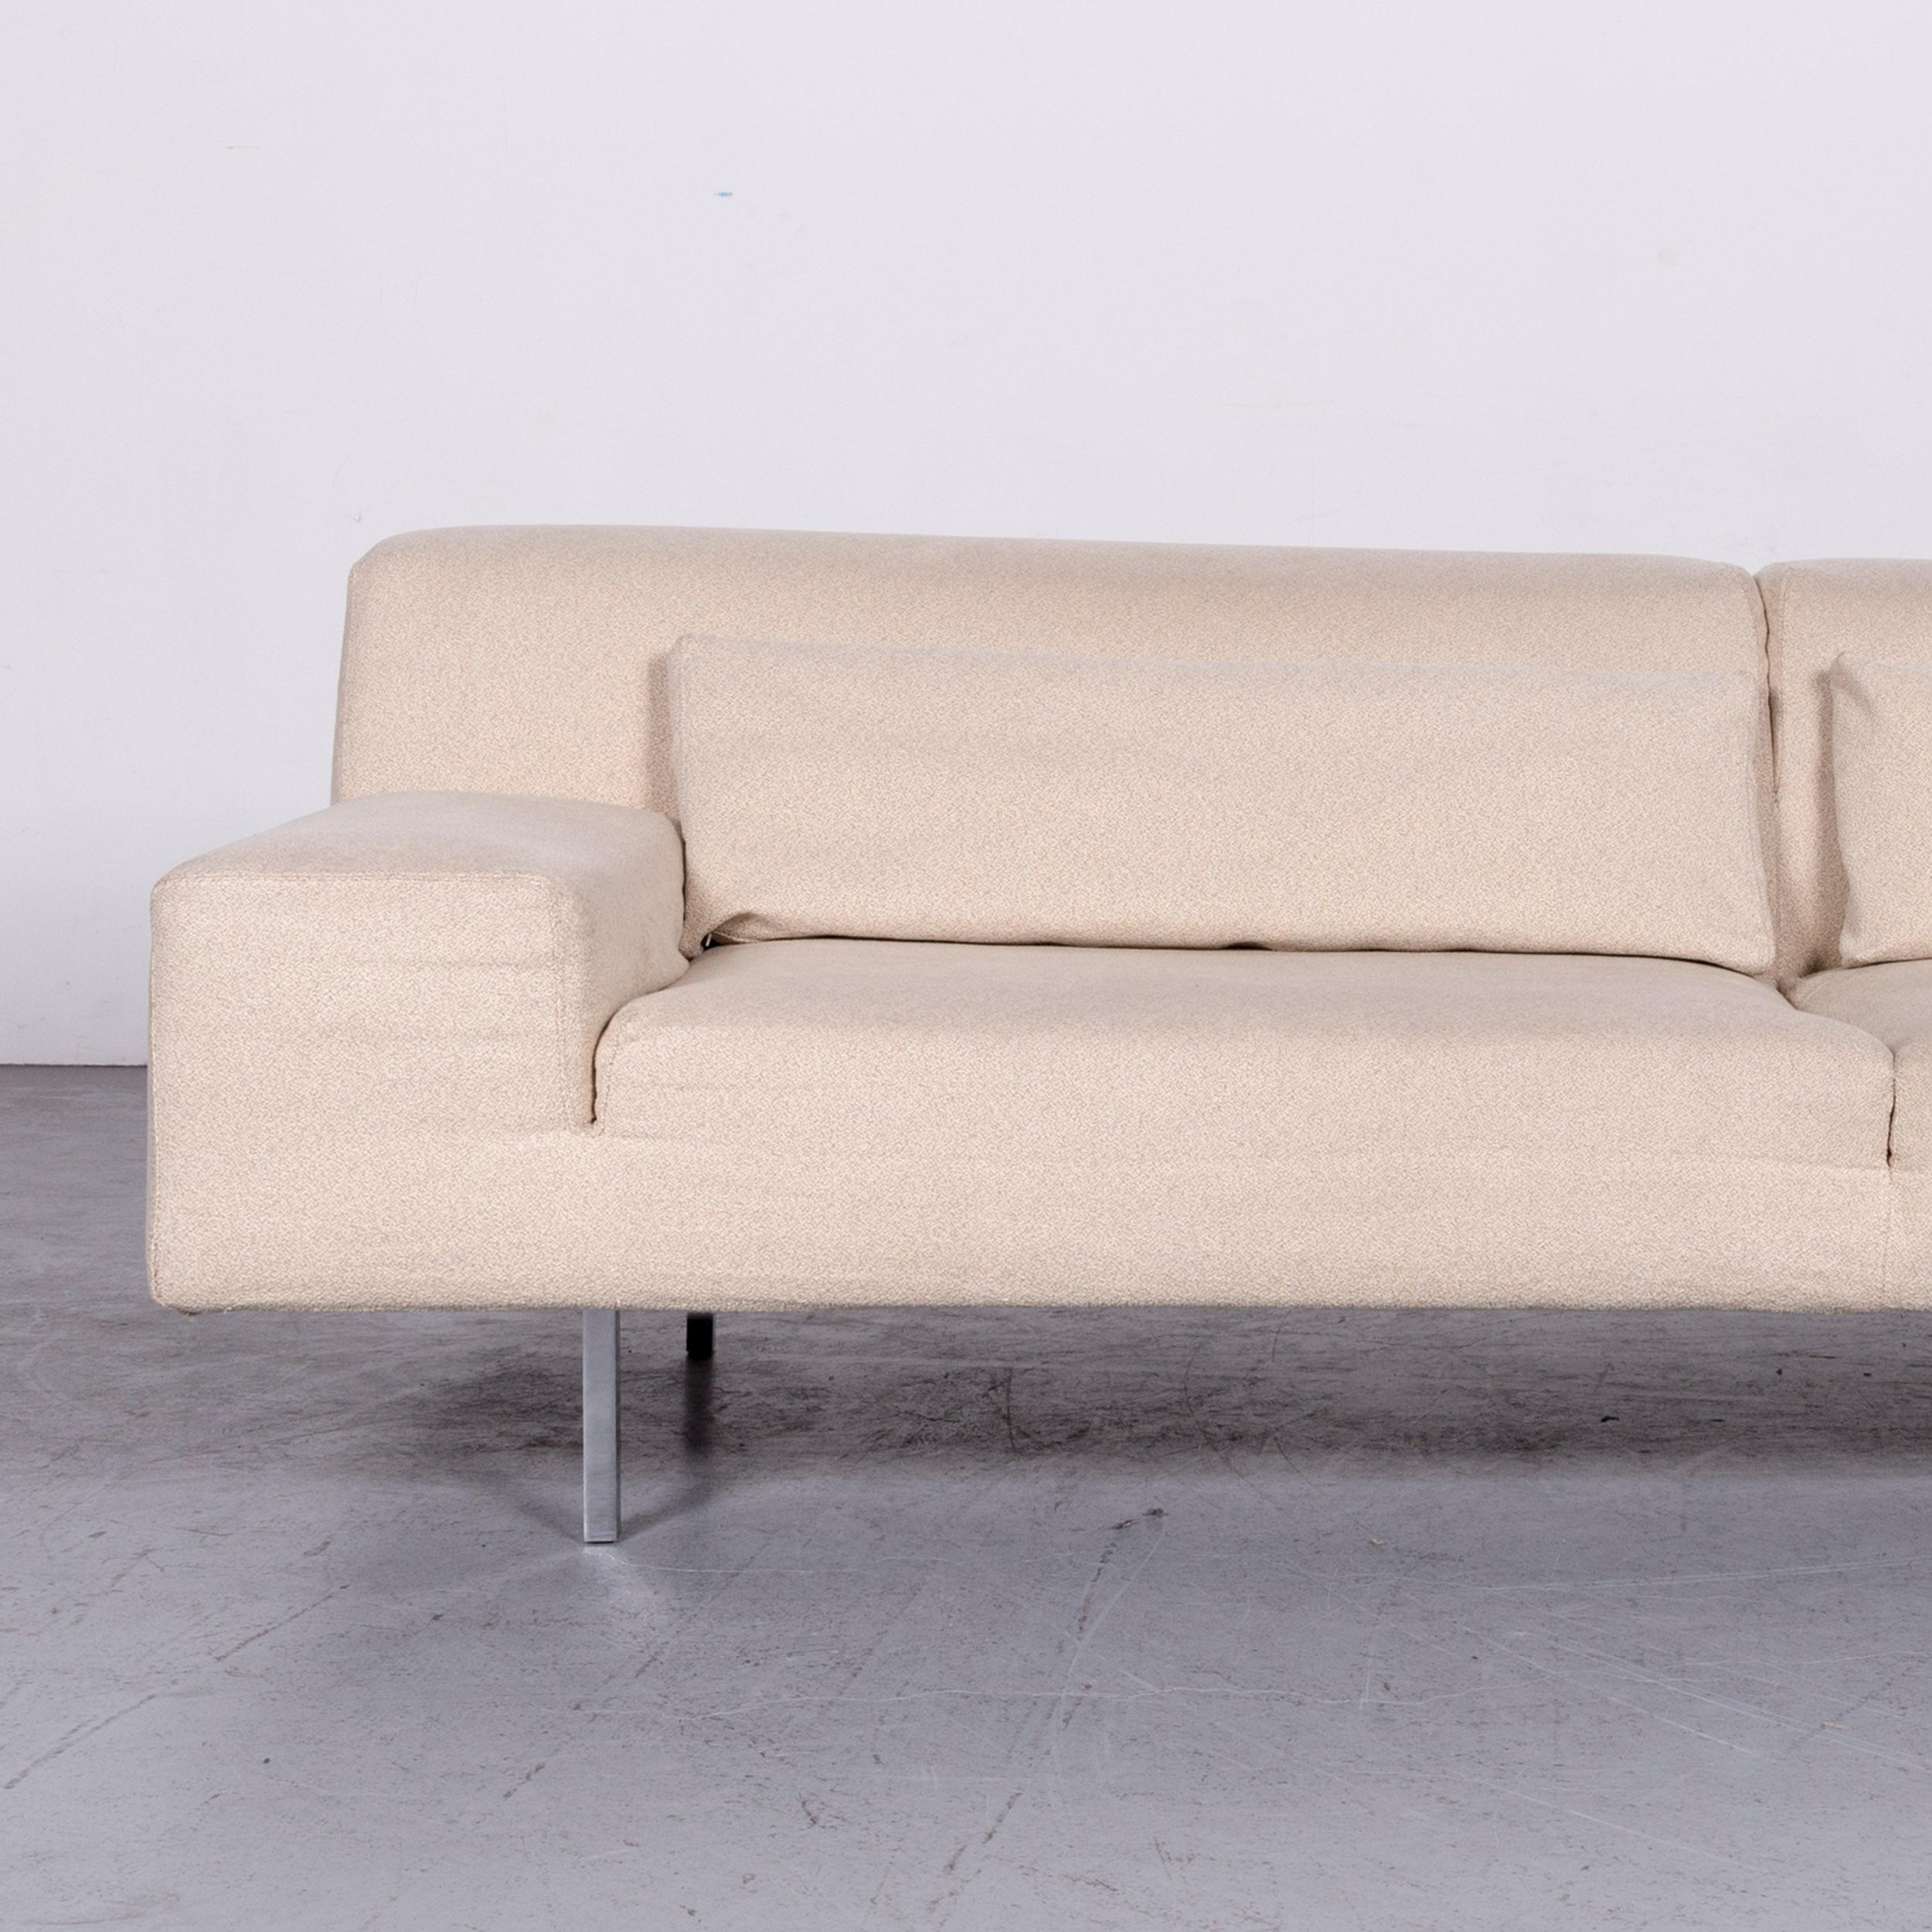 German Molteni Designer Fabric Sofa Footstool Set Crème Three-Seat Couch For Sale